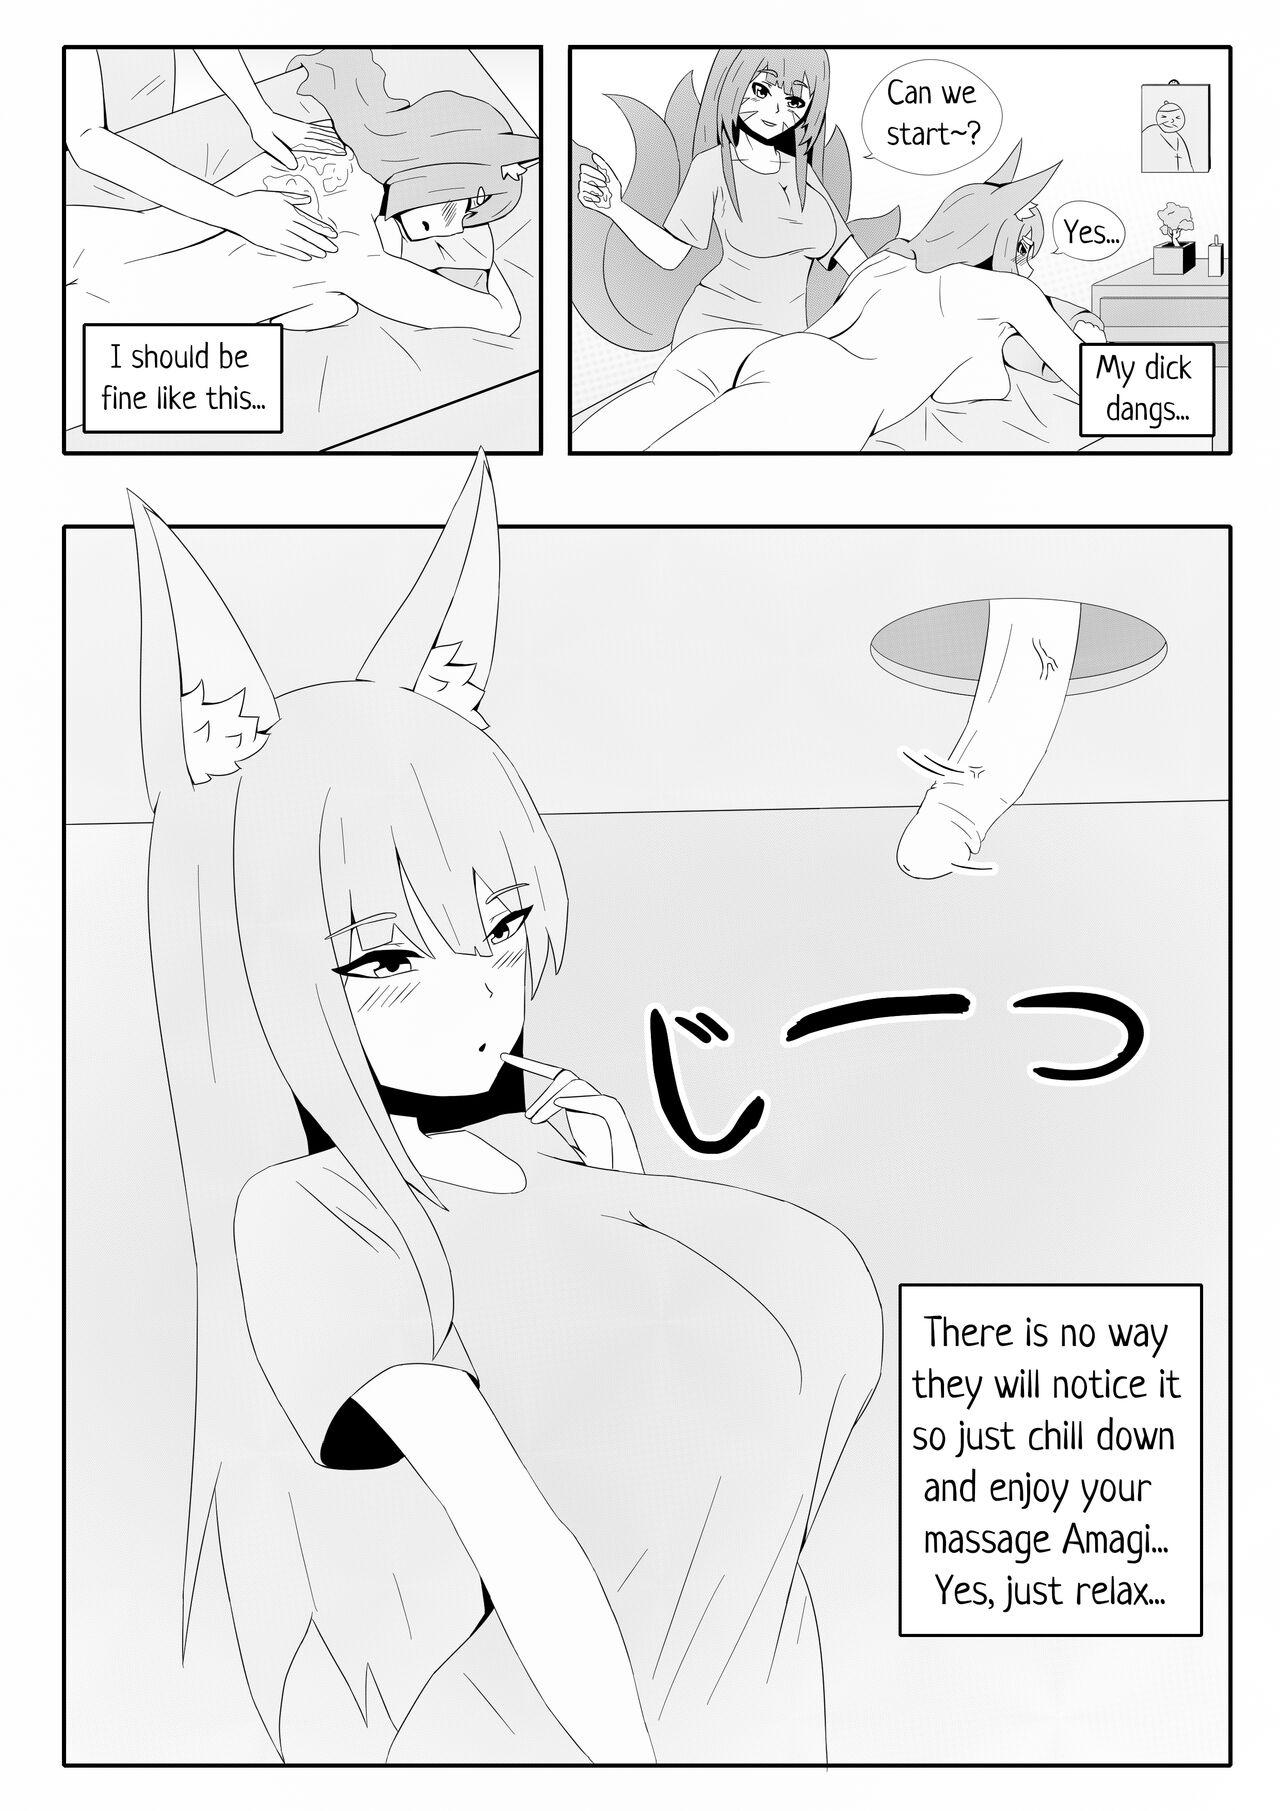 Amagi's very special massage 6